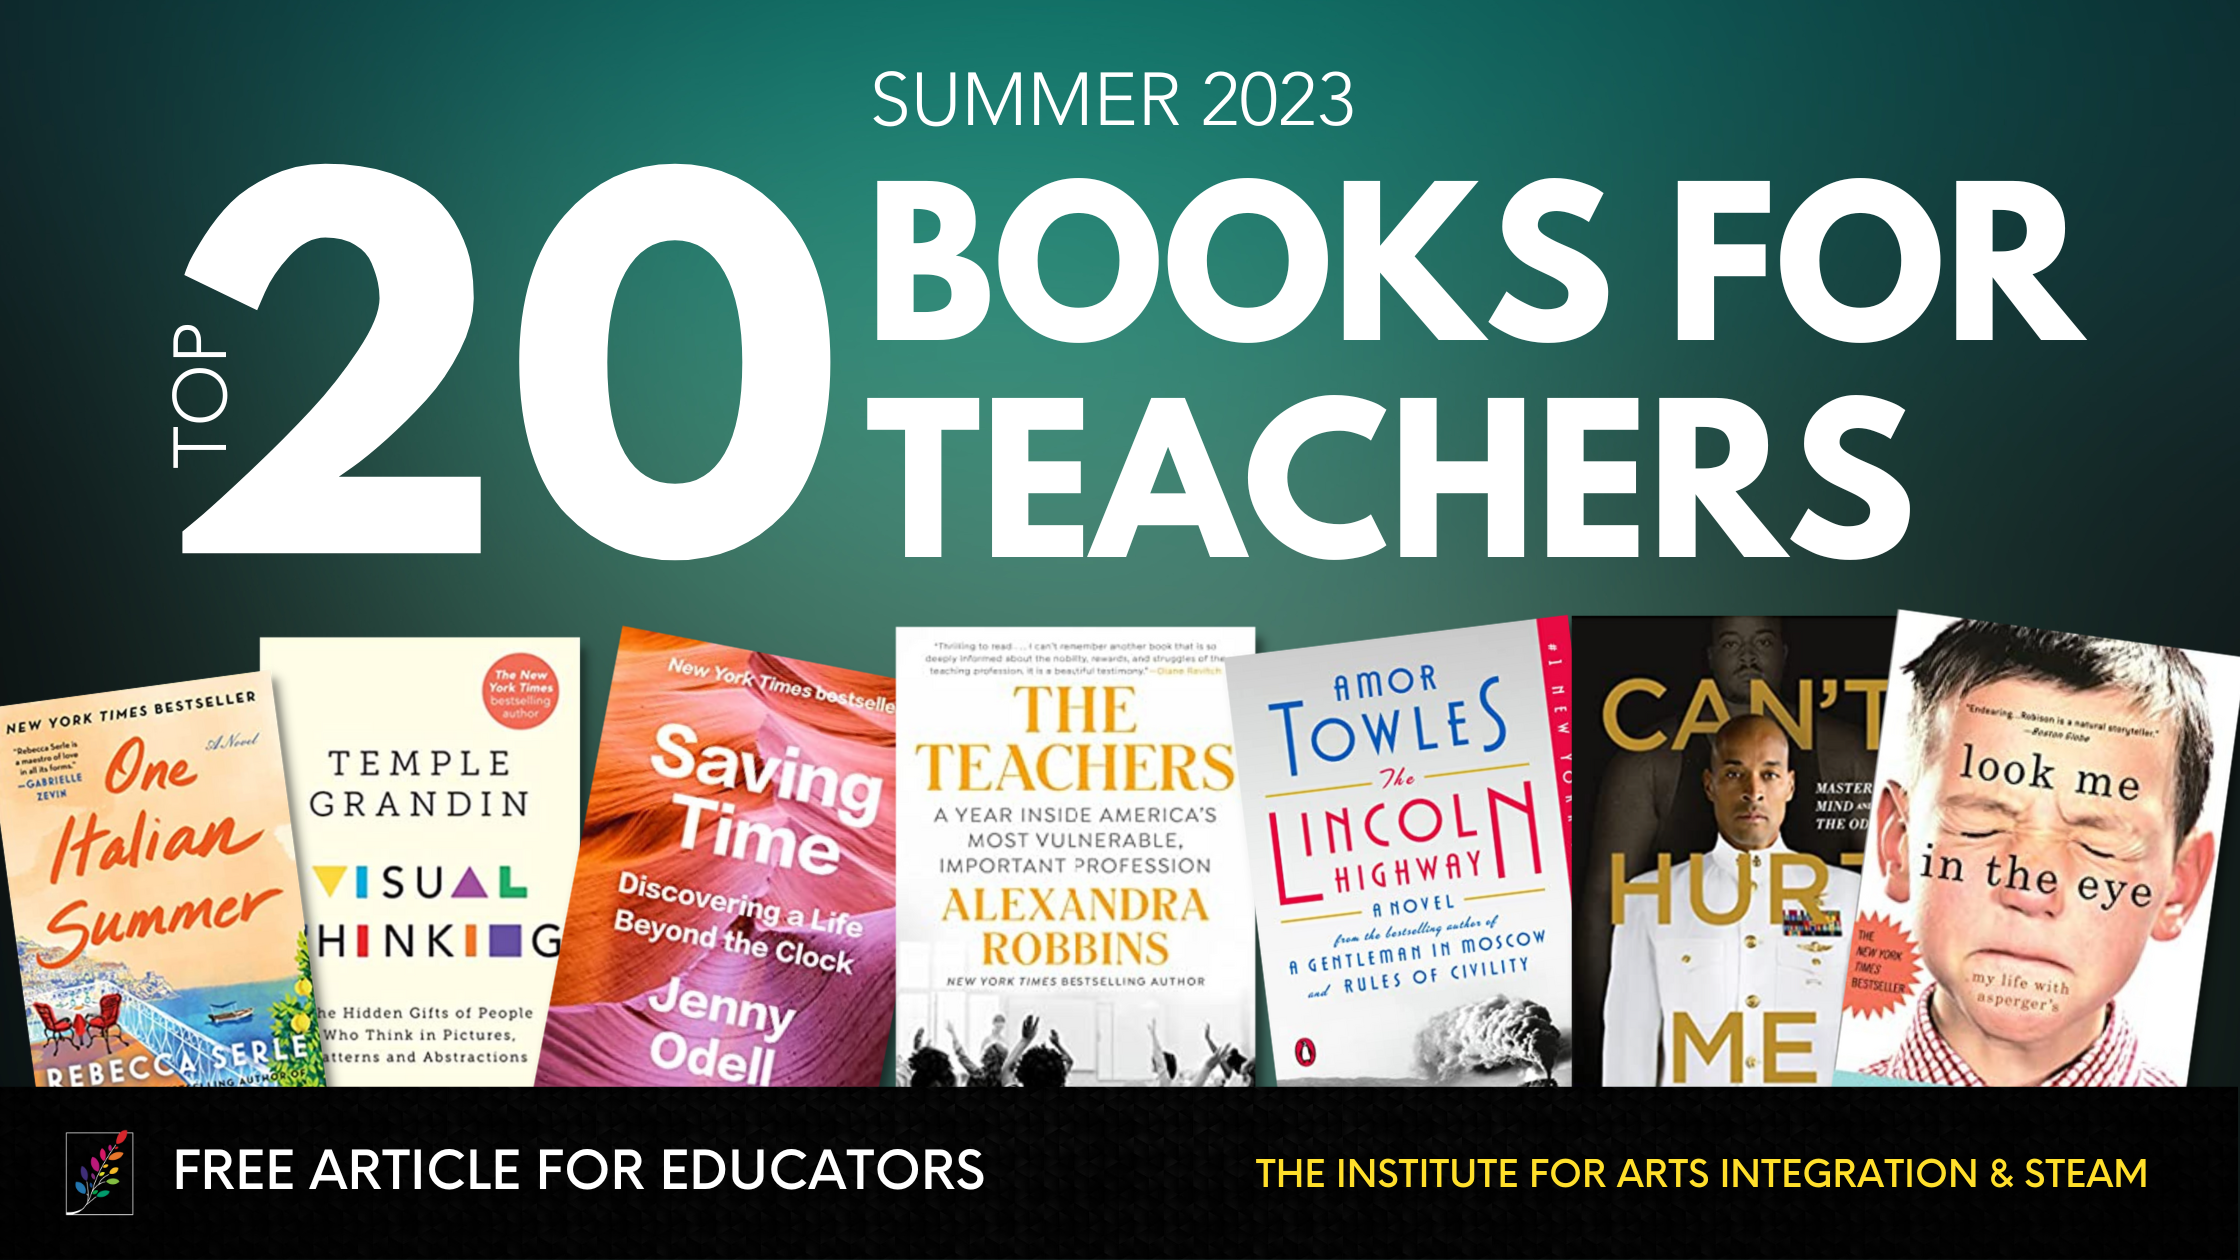 TOP 20 Books for Teachers Summer 2023